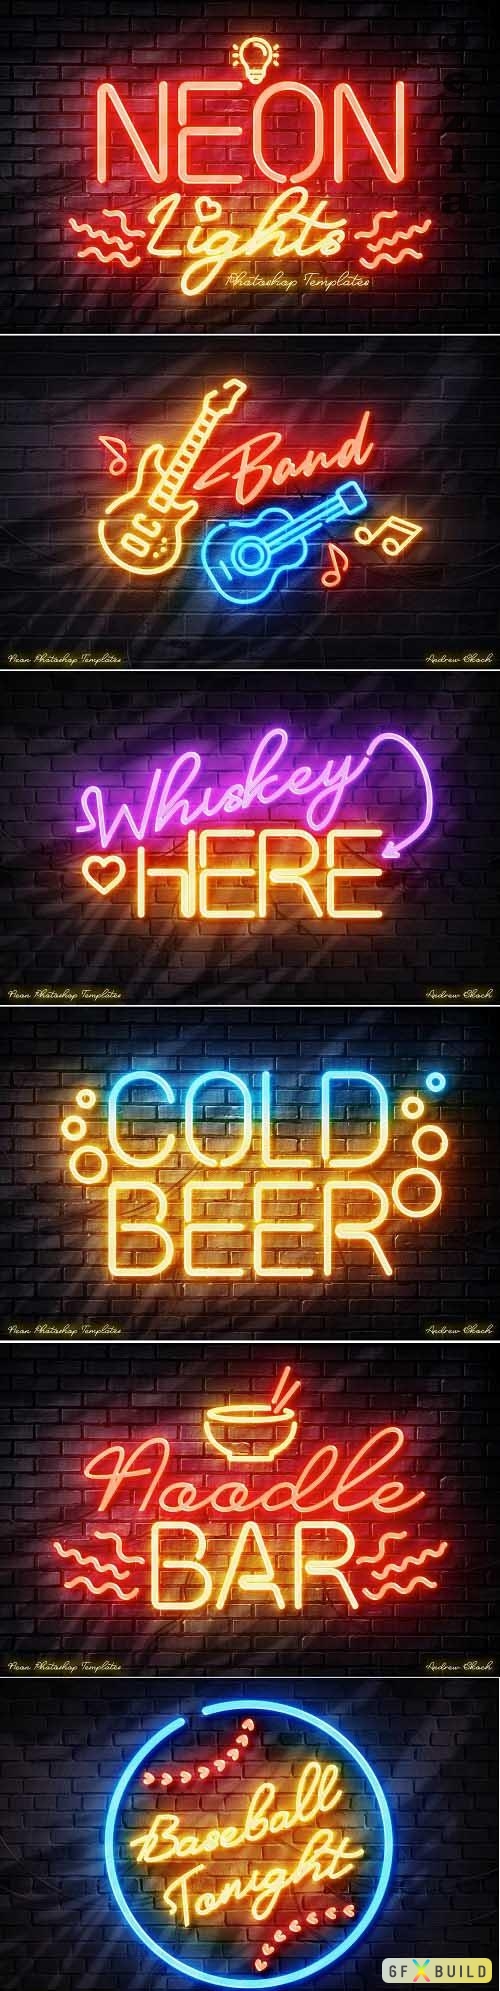 Neon Lights Photoshop Templates